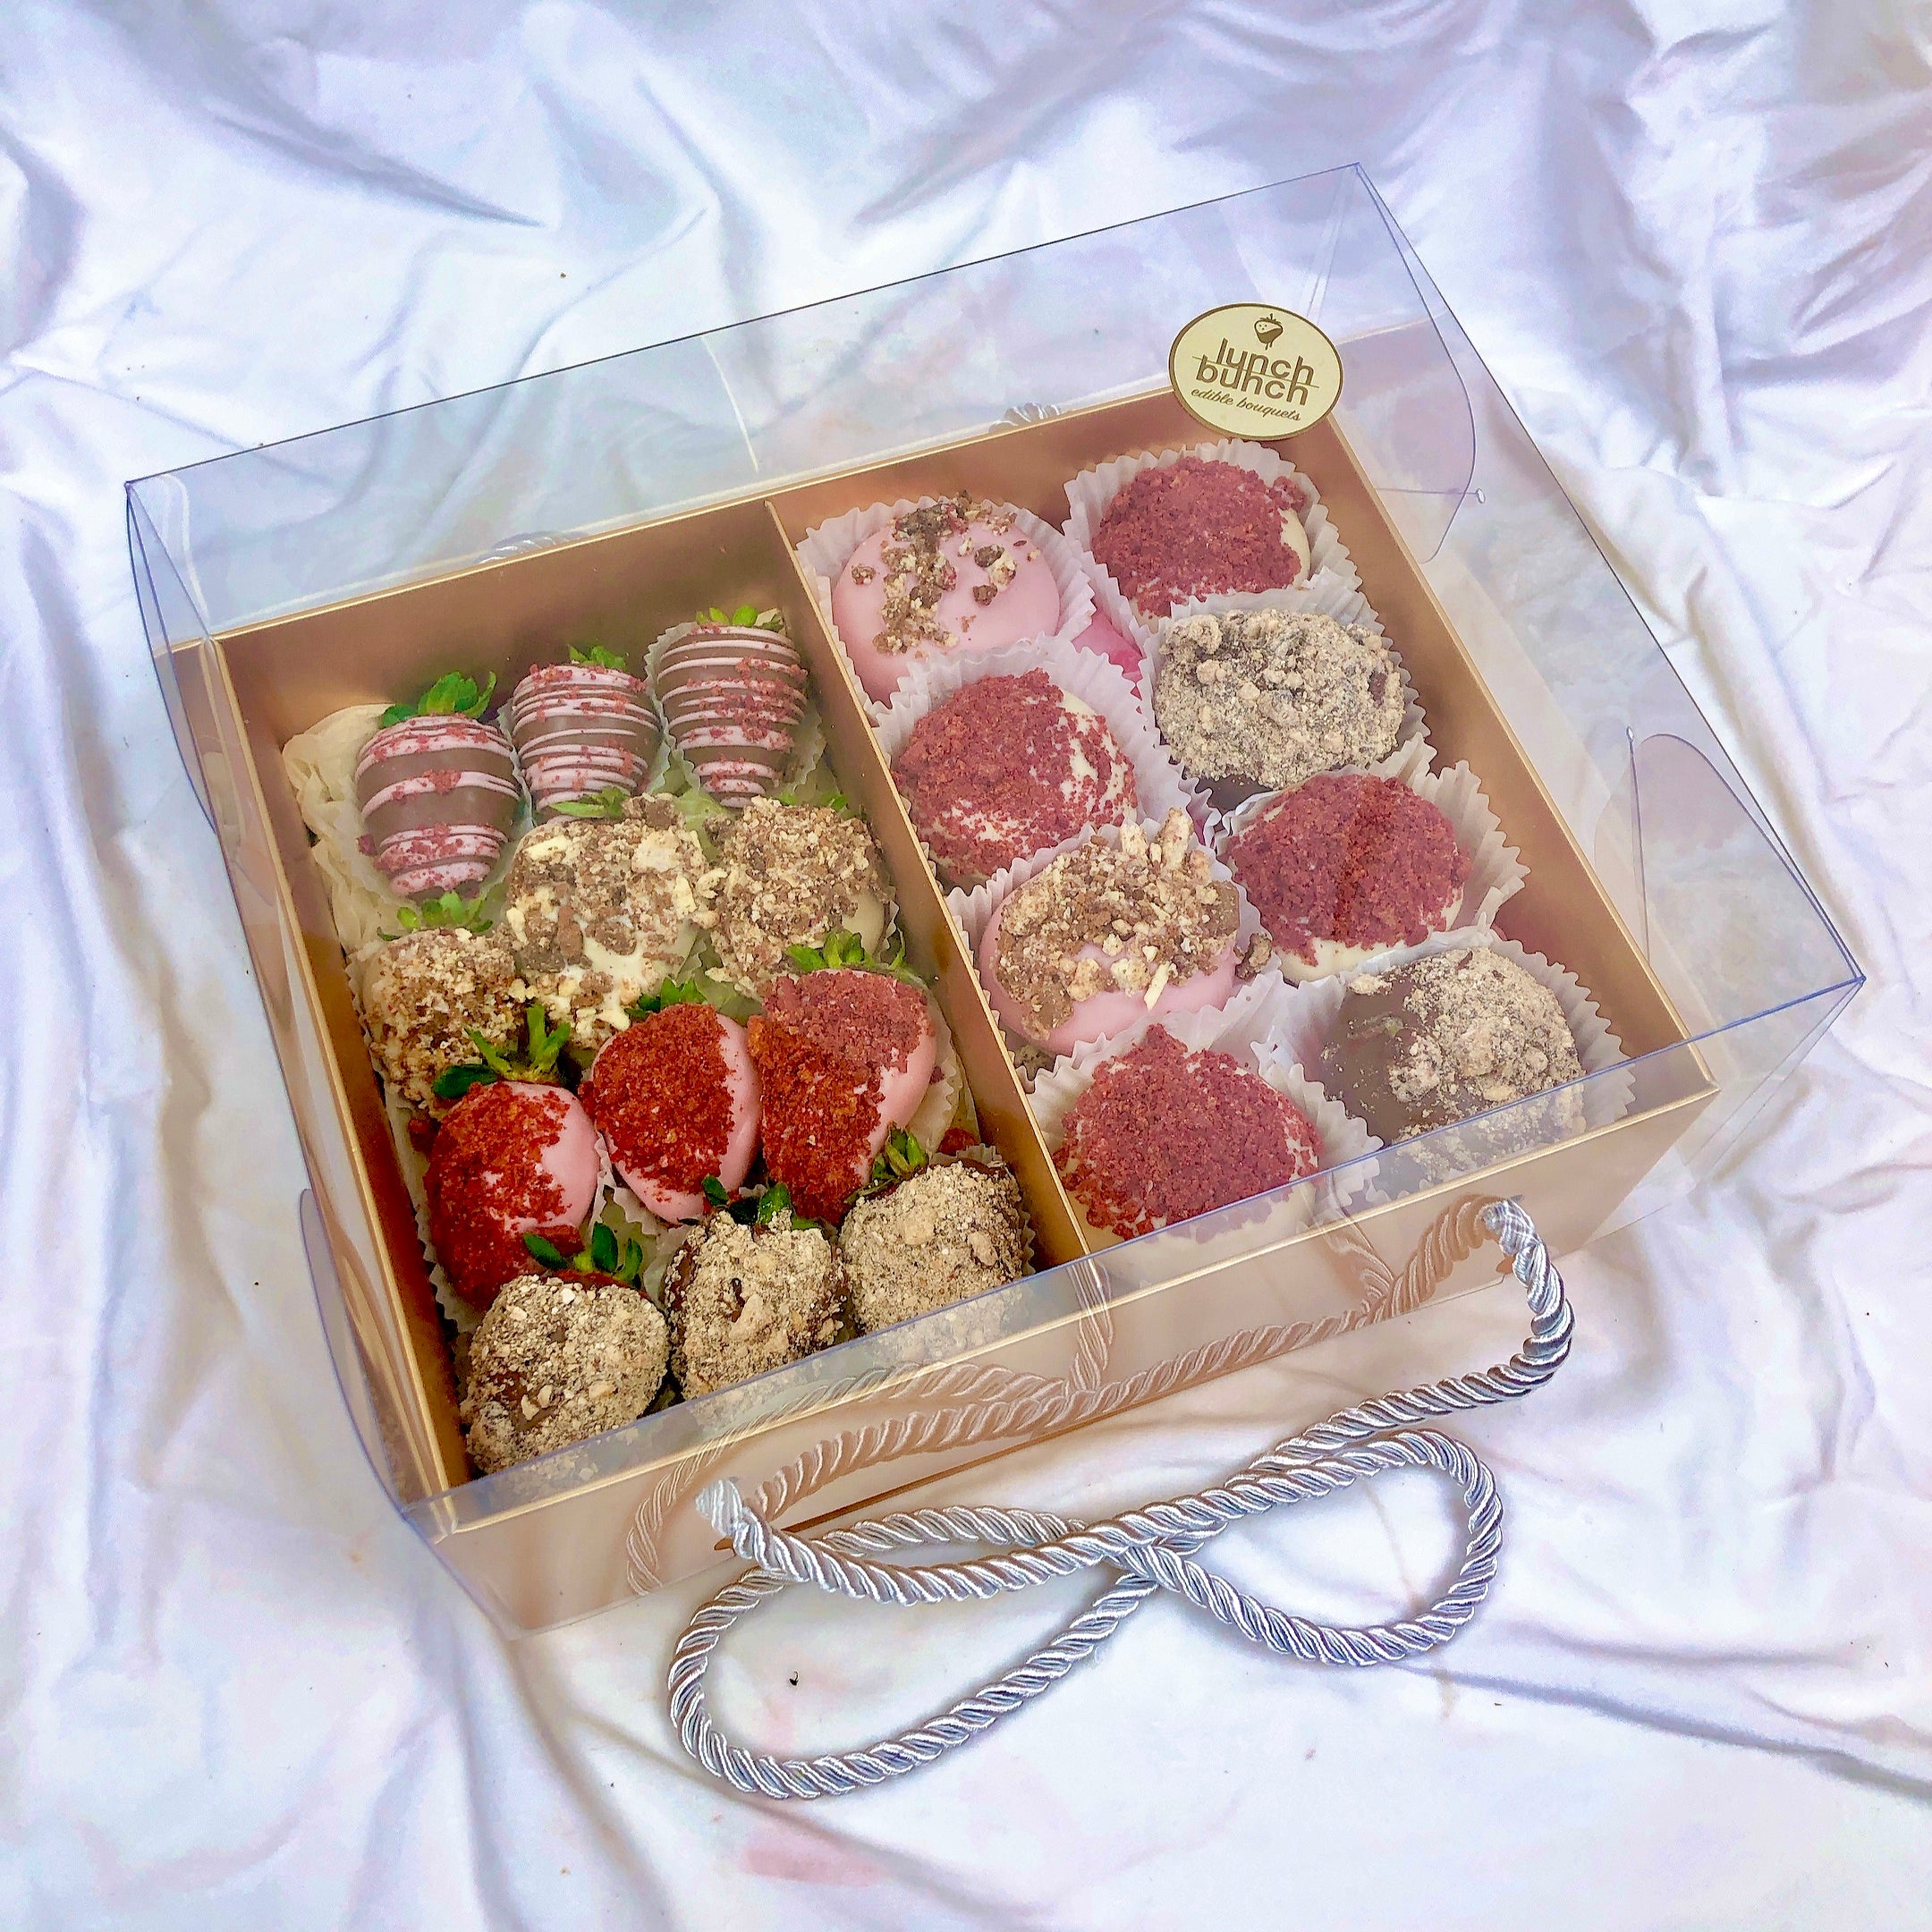 oreo cookies gift box chocolate strawberries gift hamper doughnut hamper sweet dessert box same day delivery online order